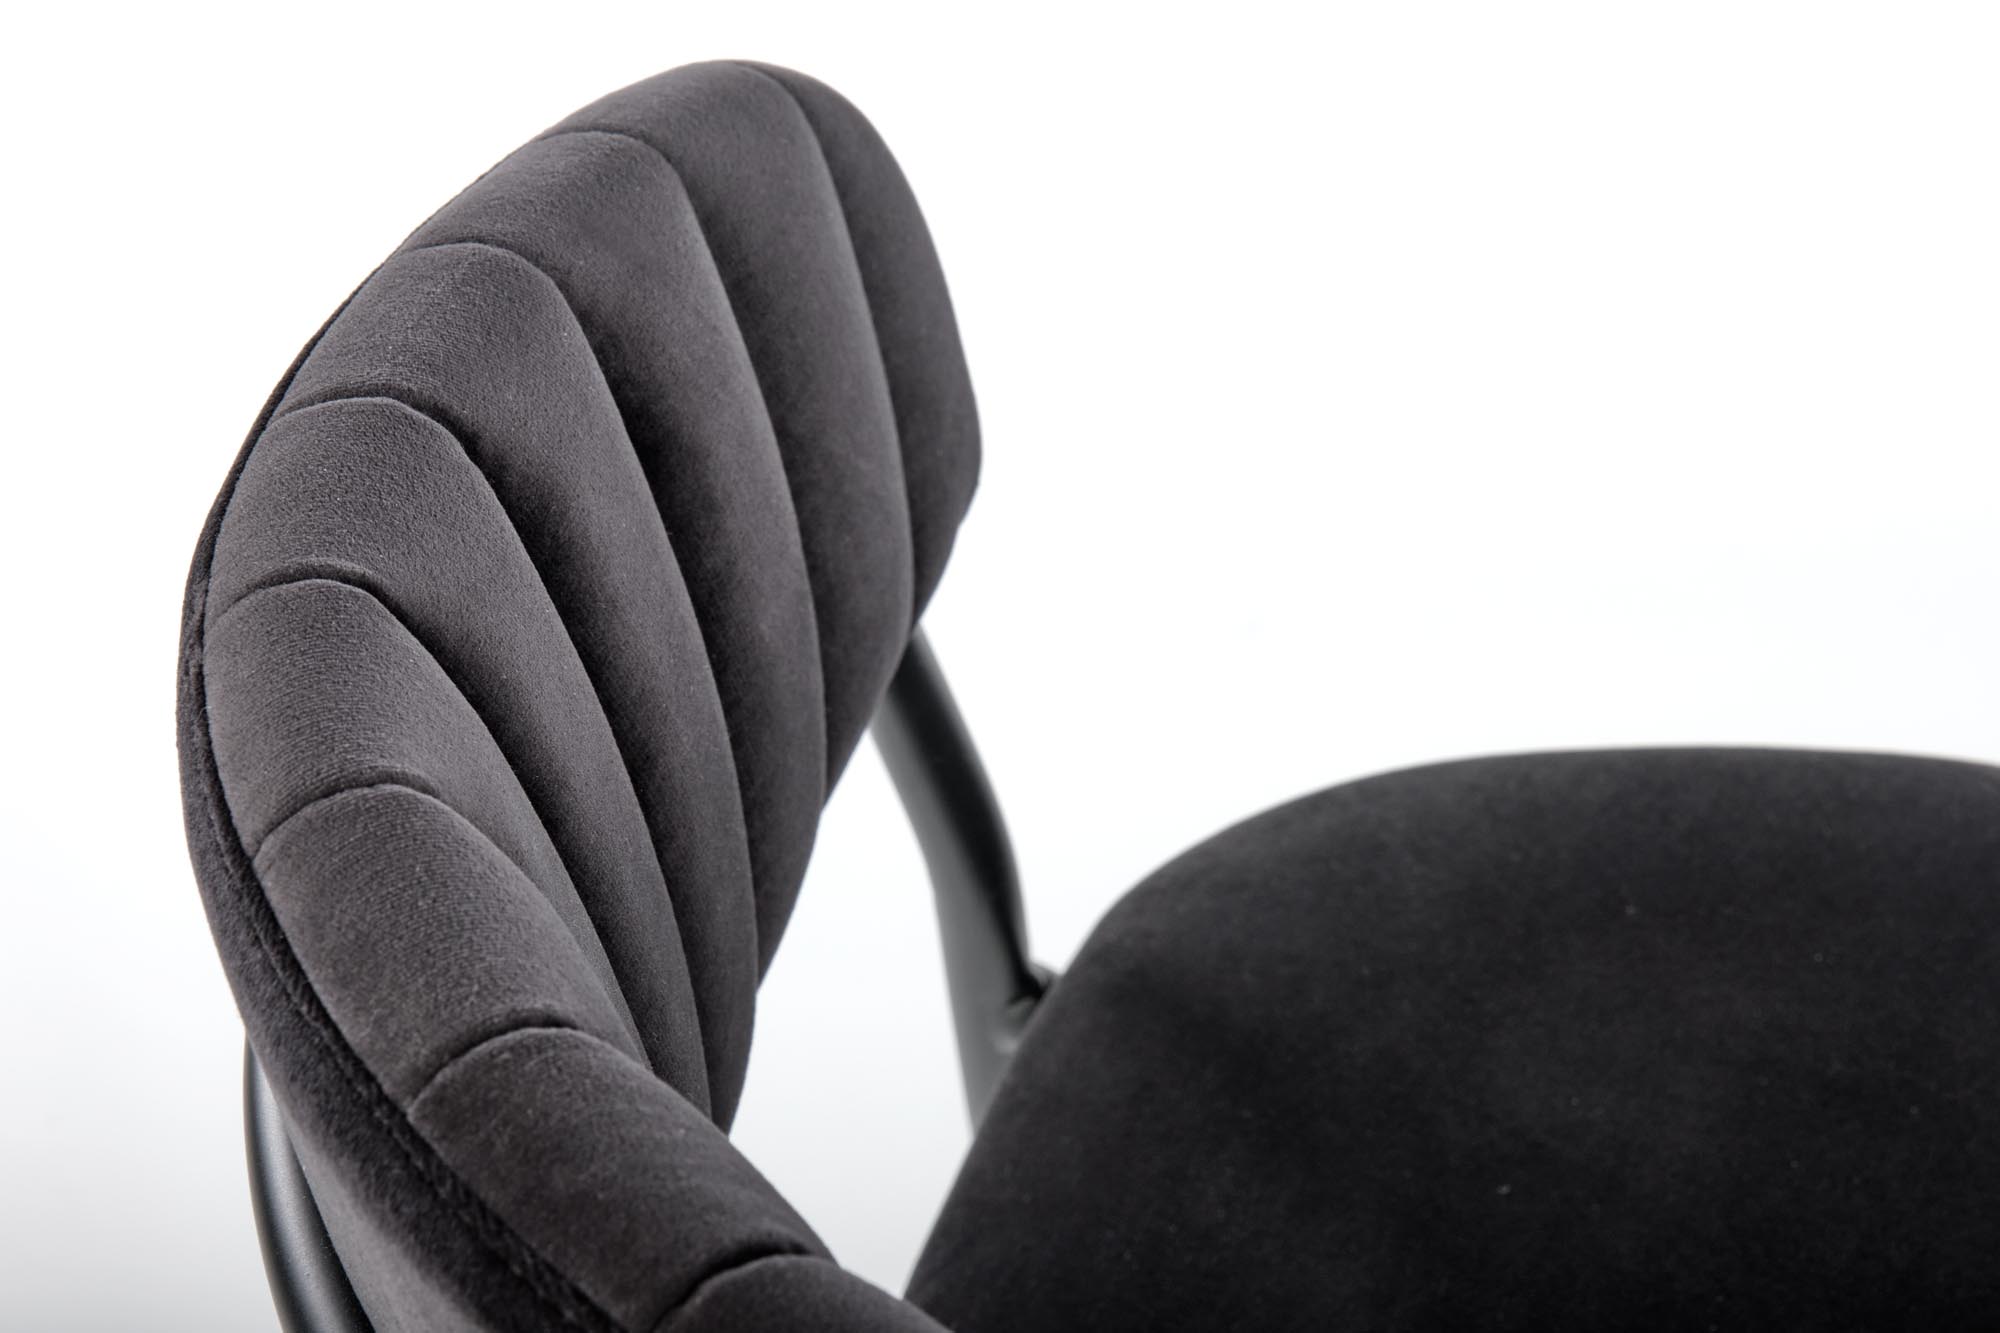 K426 stolica, boja: crna